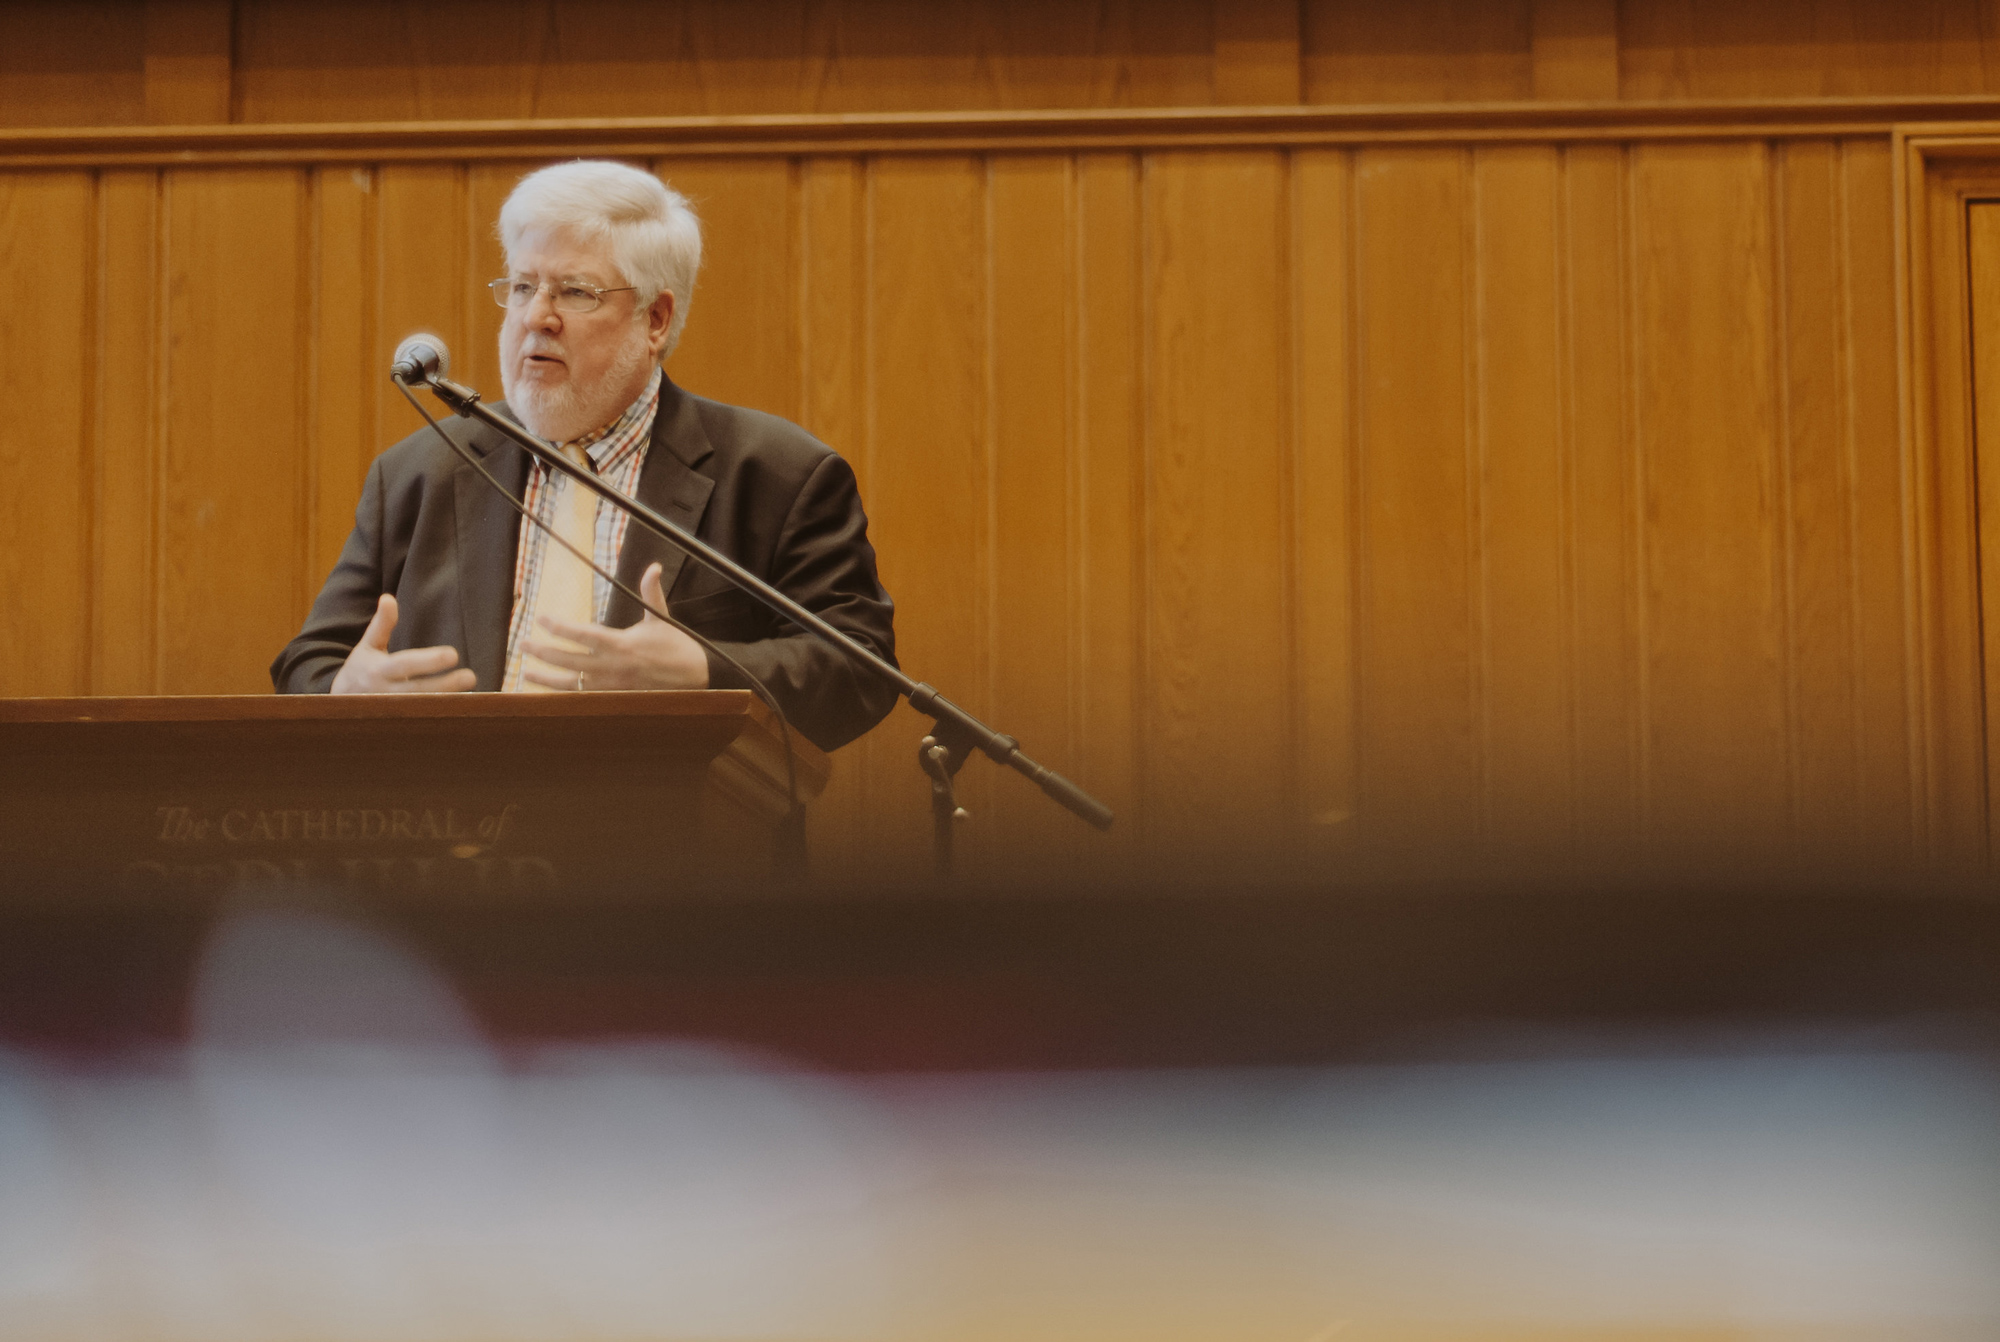 The Rev. Thomas Hagood, Pastor at Columbia Presbyterian Church and Executive Director of the New Sanctuary Movement of Atlanta